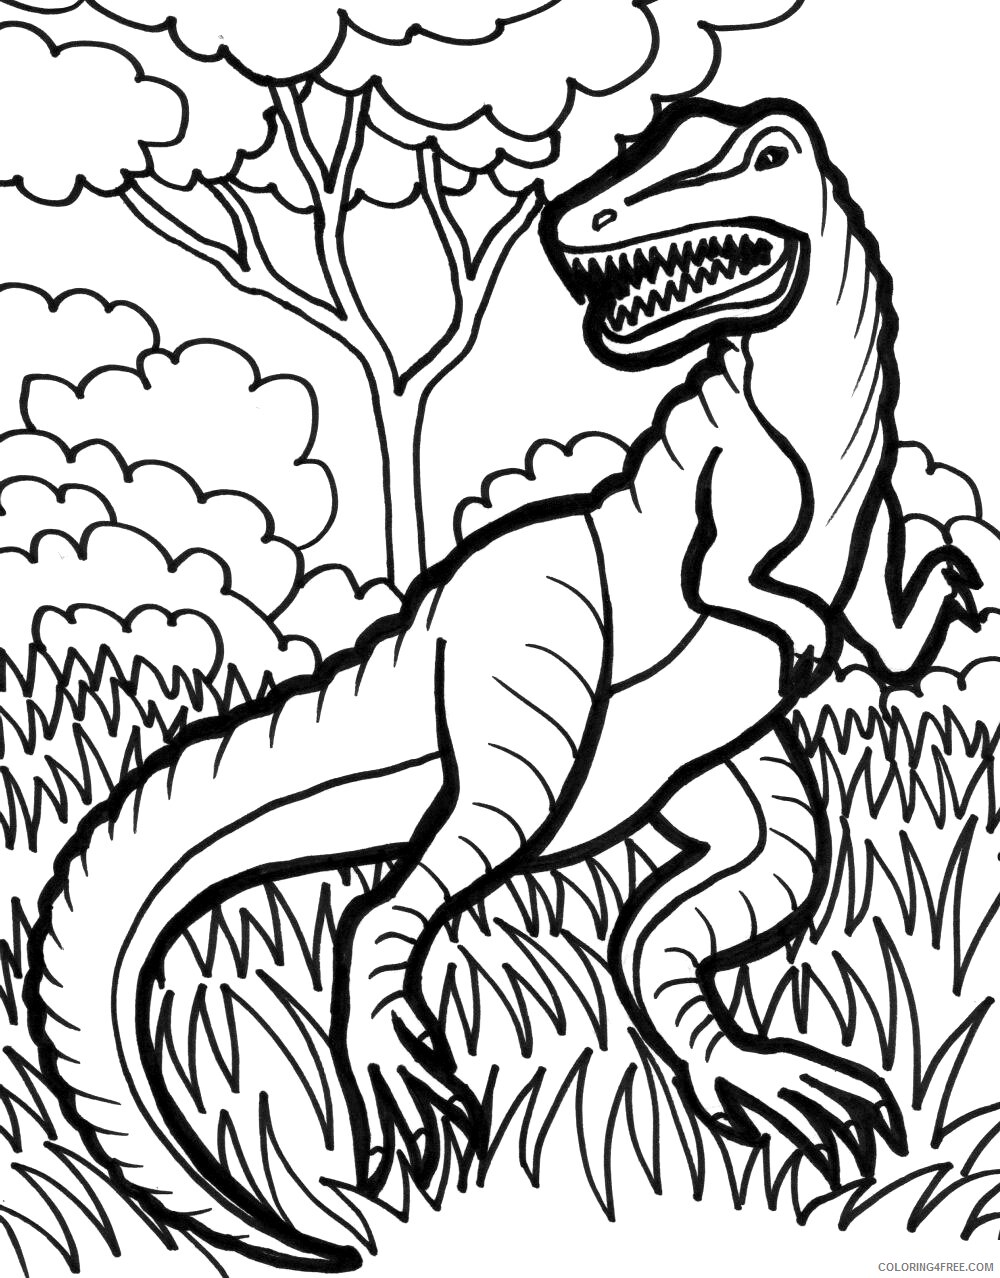 Tyrannosaurus Rex Coloring Pages Animal Printable Sheets Free TRex 2021 4910 Coloring4free